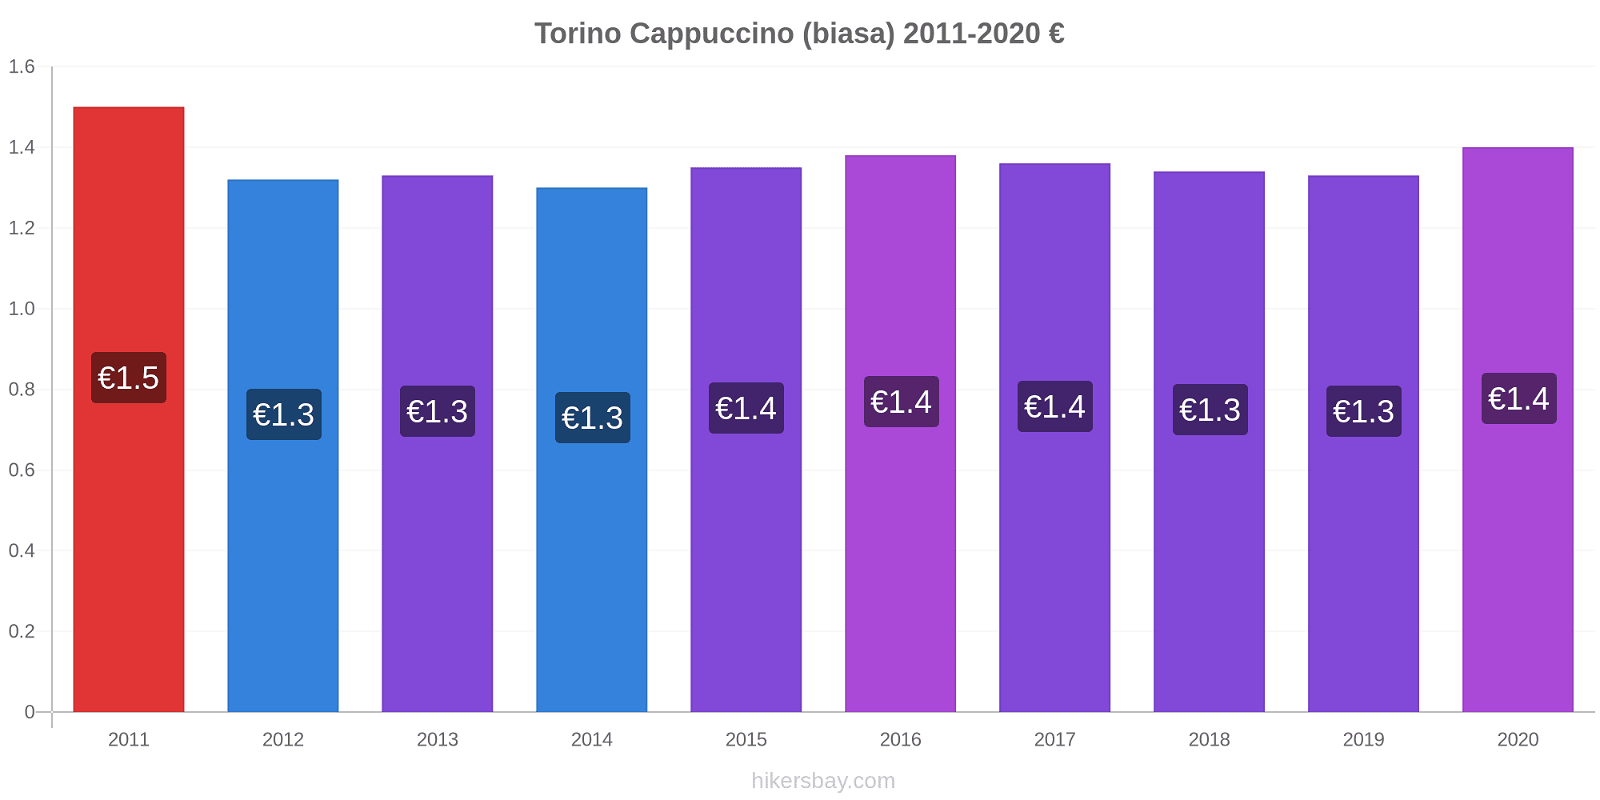 Torino perubahan harga Cappuccino (biasa) hikersbay.com